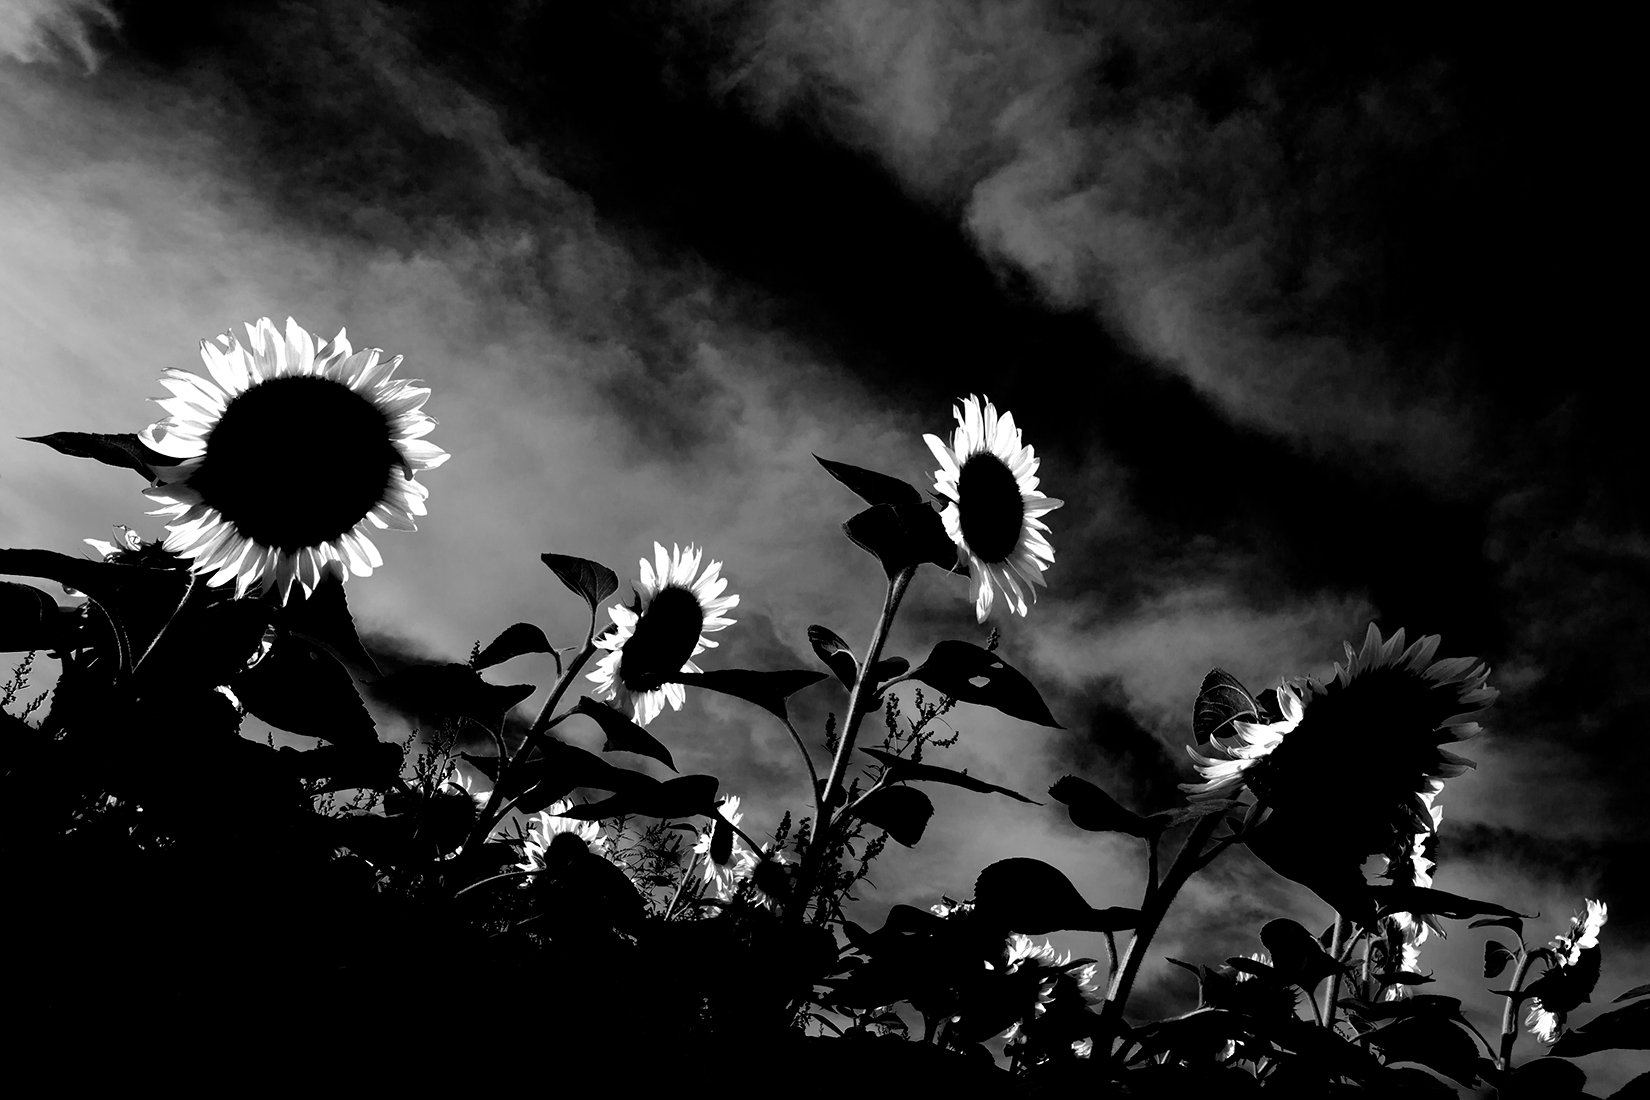     Hu Yang, Sunflowers (black), 2023

